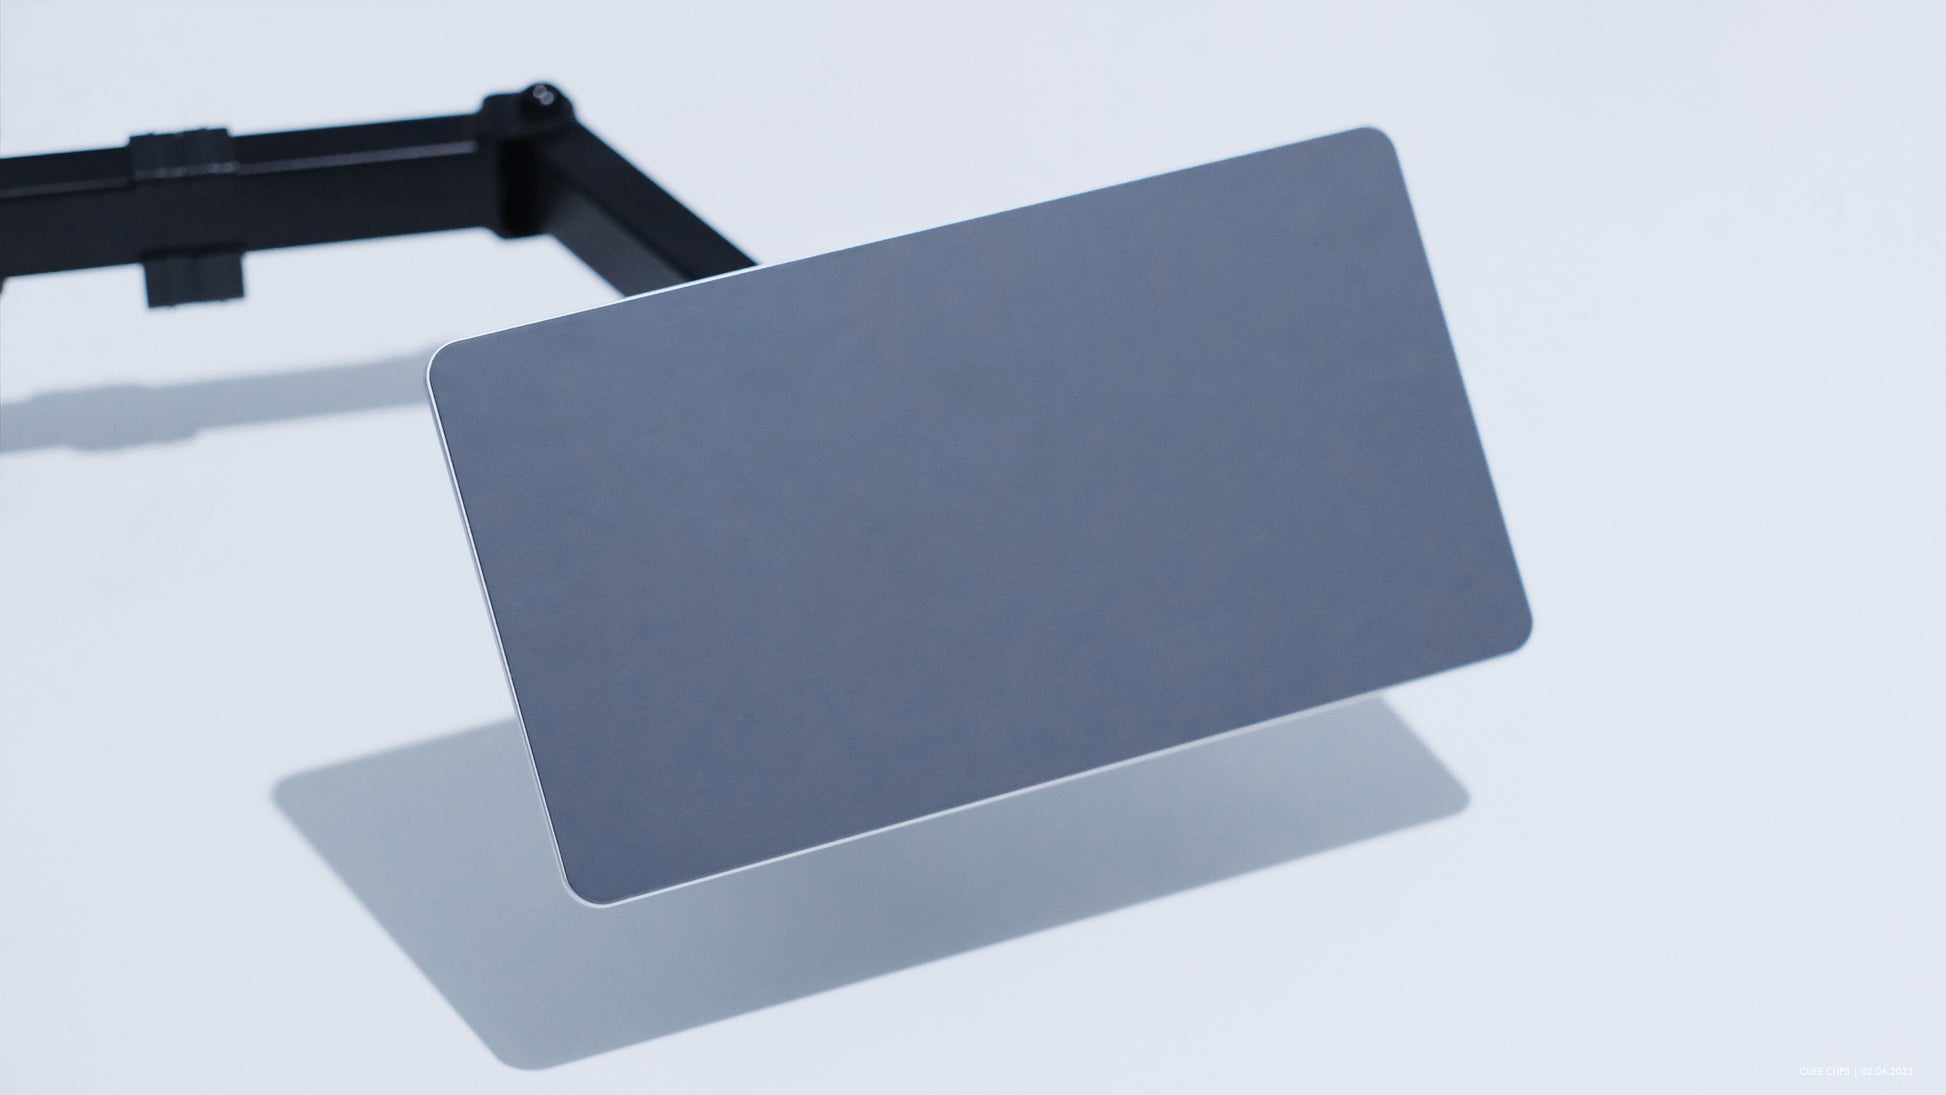 iPad Magnet Mount Plate VESA Compatible